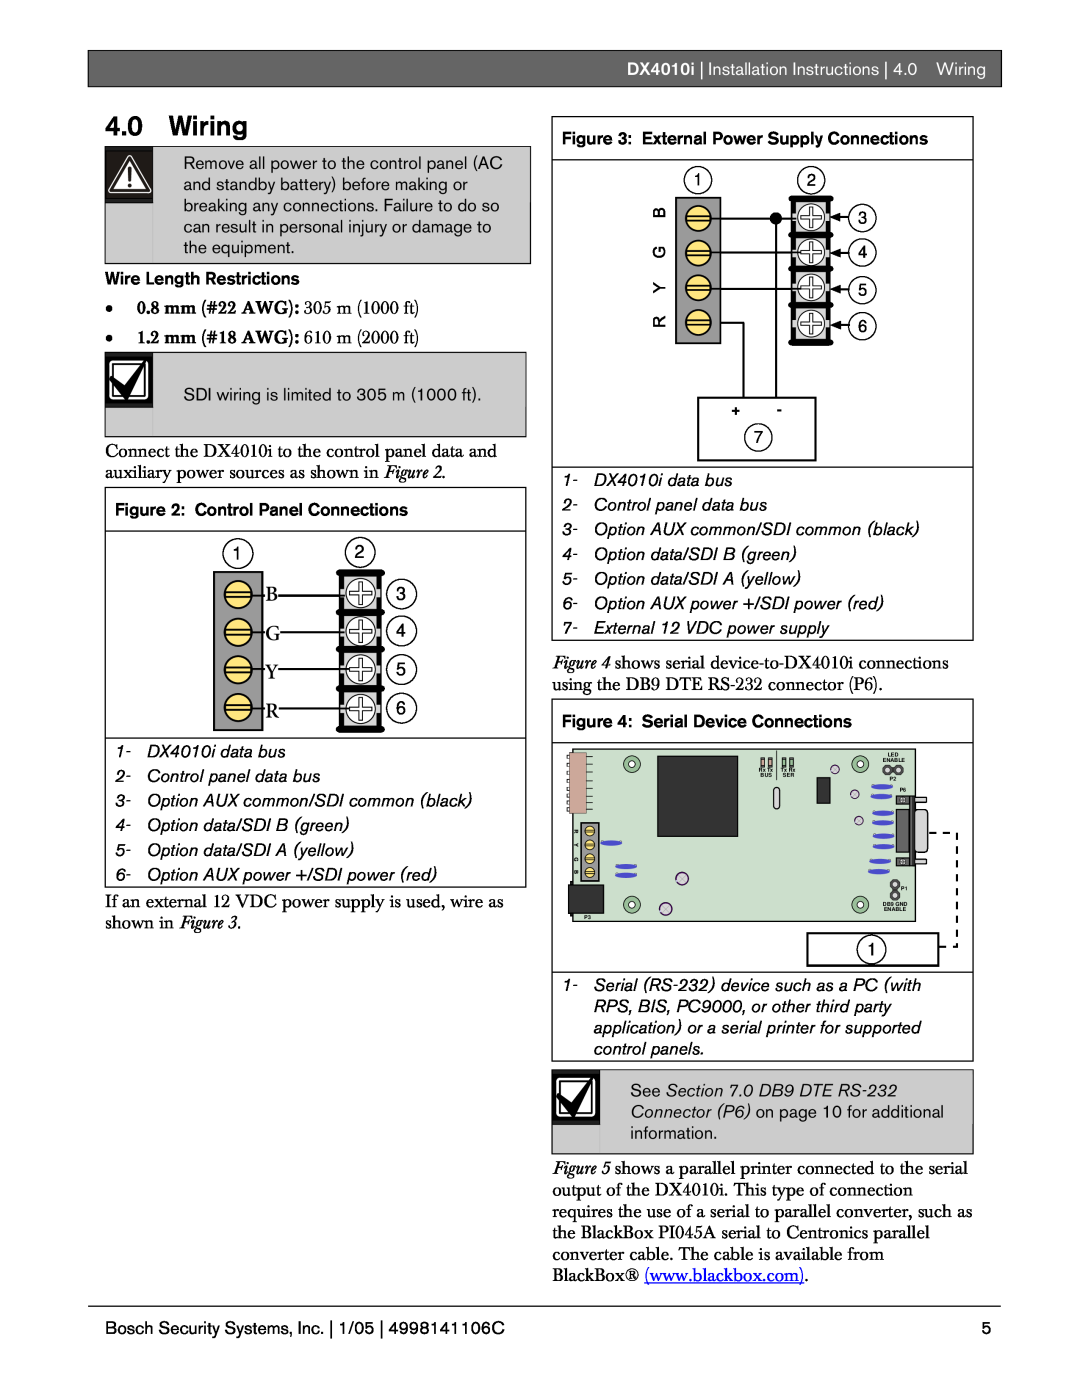 Bosch Appliances DX4010I DX4010i | Installation Instructions | 4.0 Wiring, Option AUX common/SDI common black 